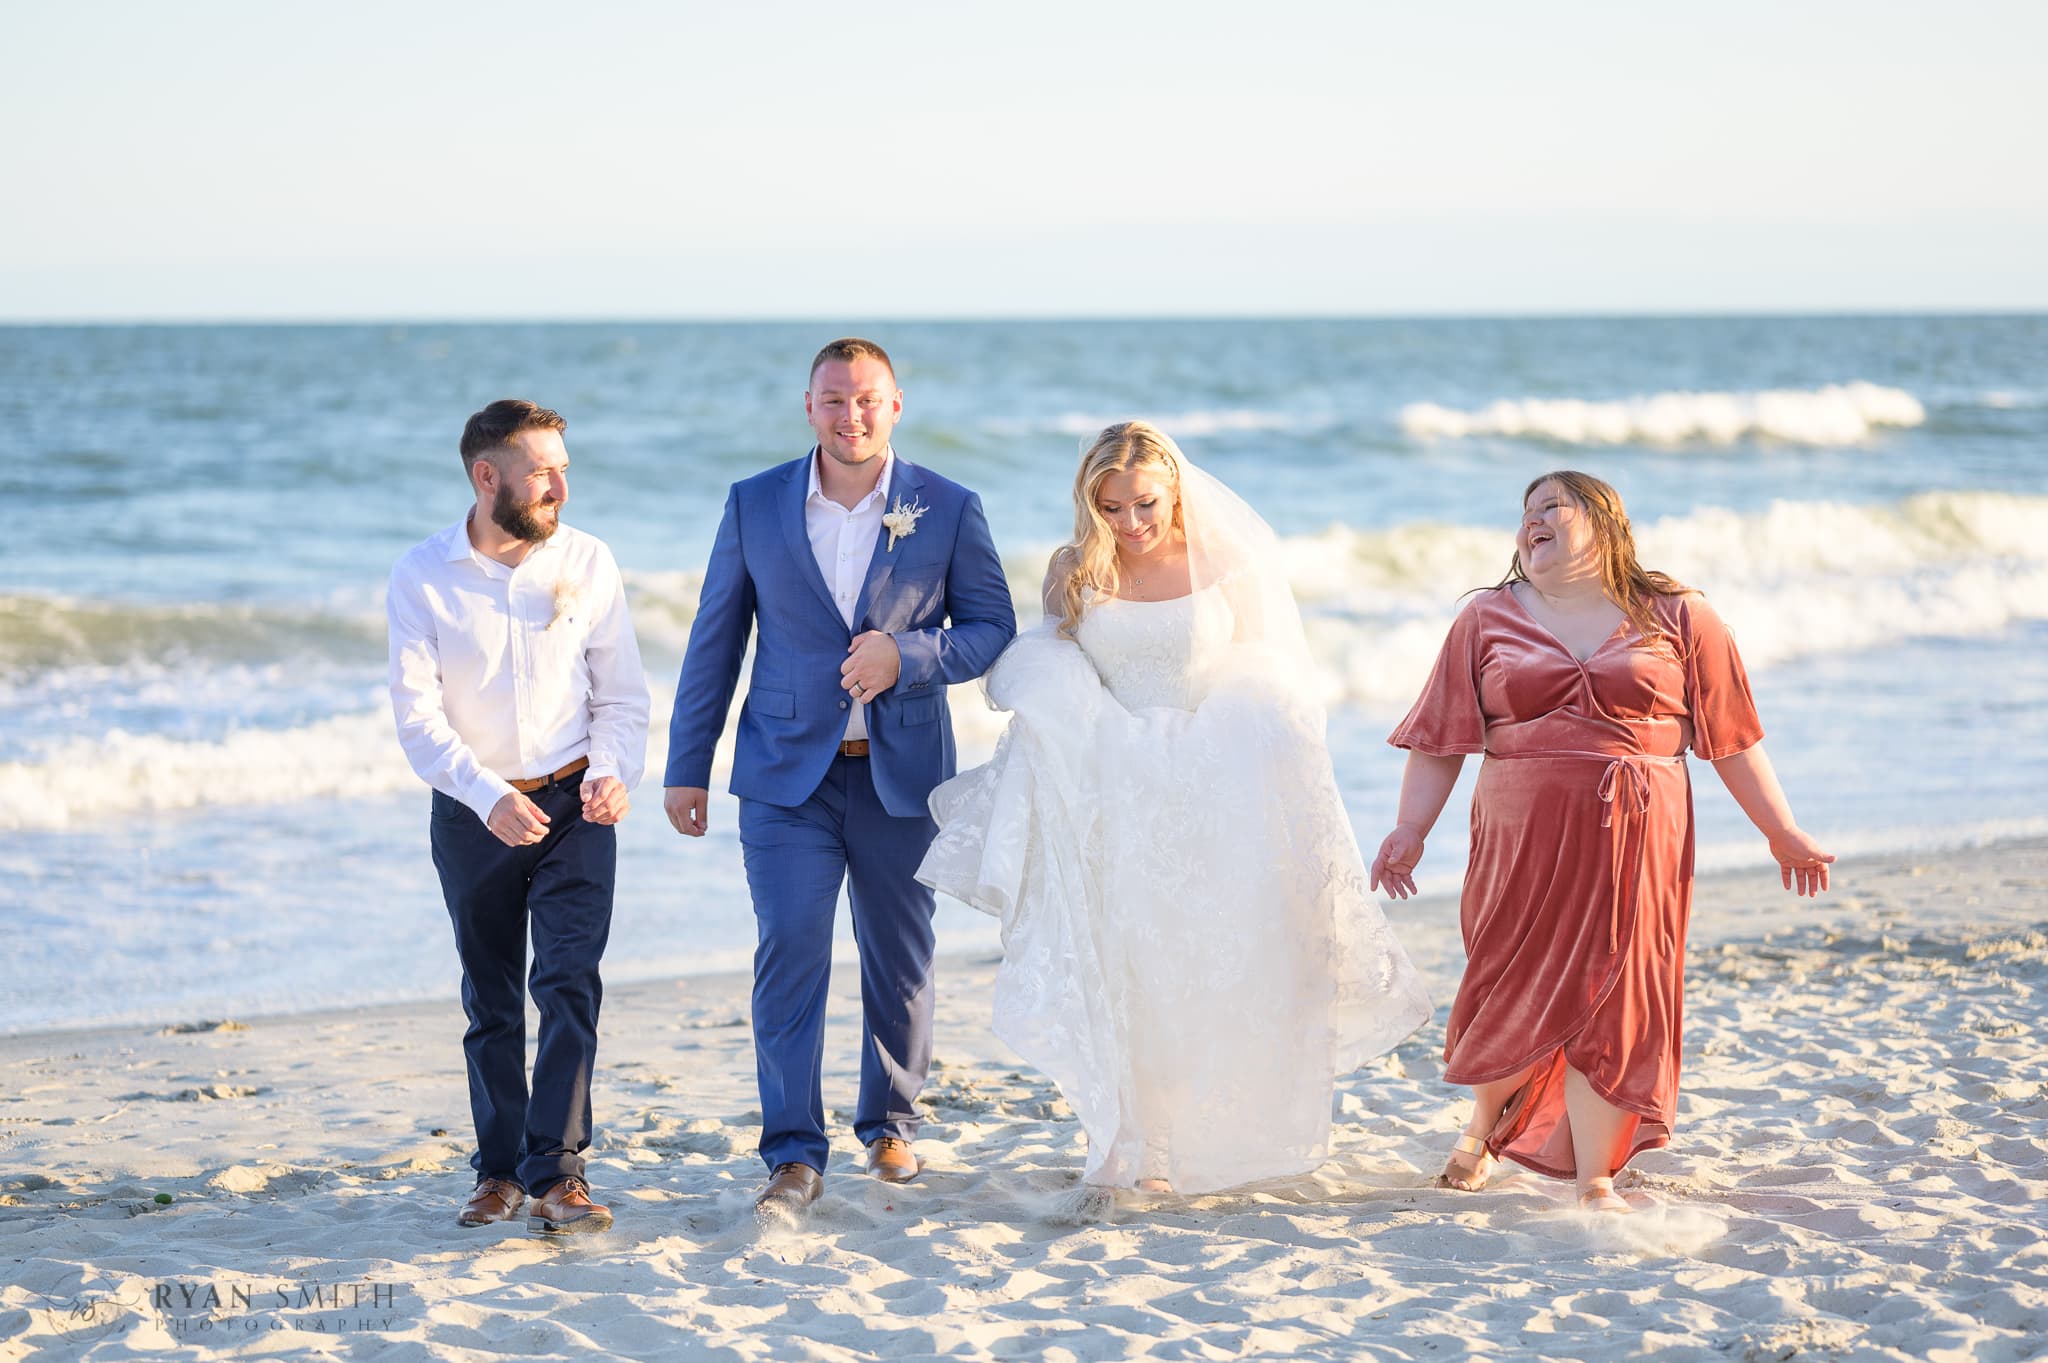 Wedding party walking down the beach - North Beach Resort & Villas